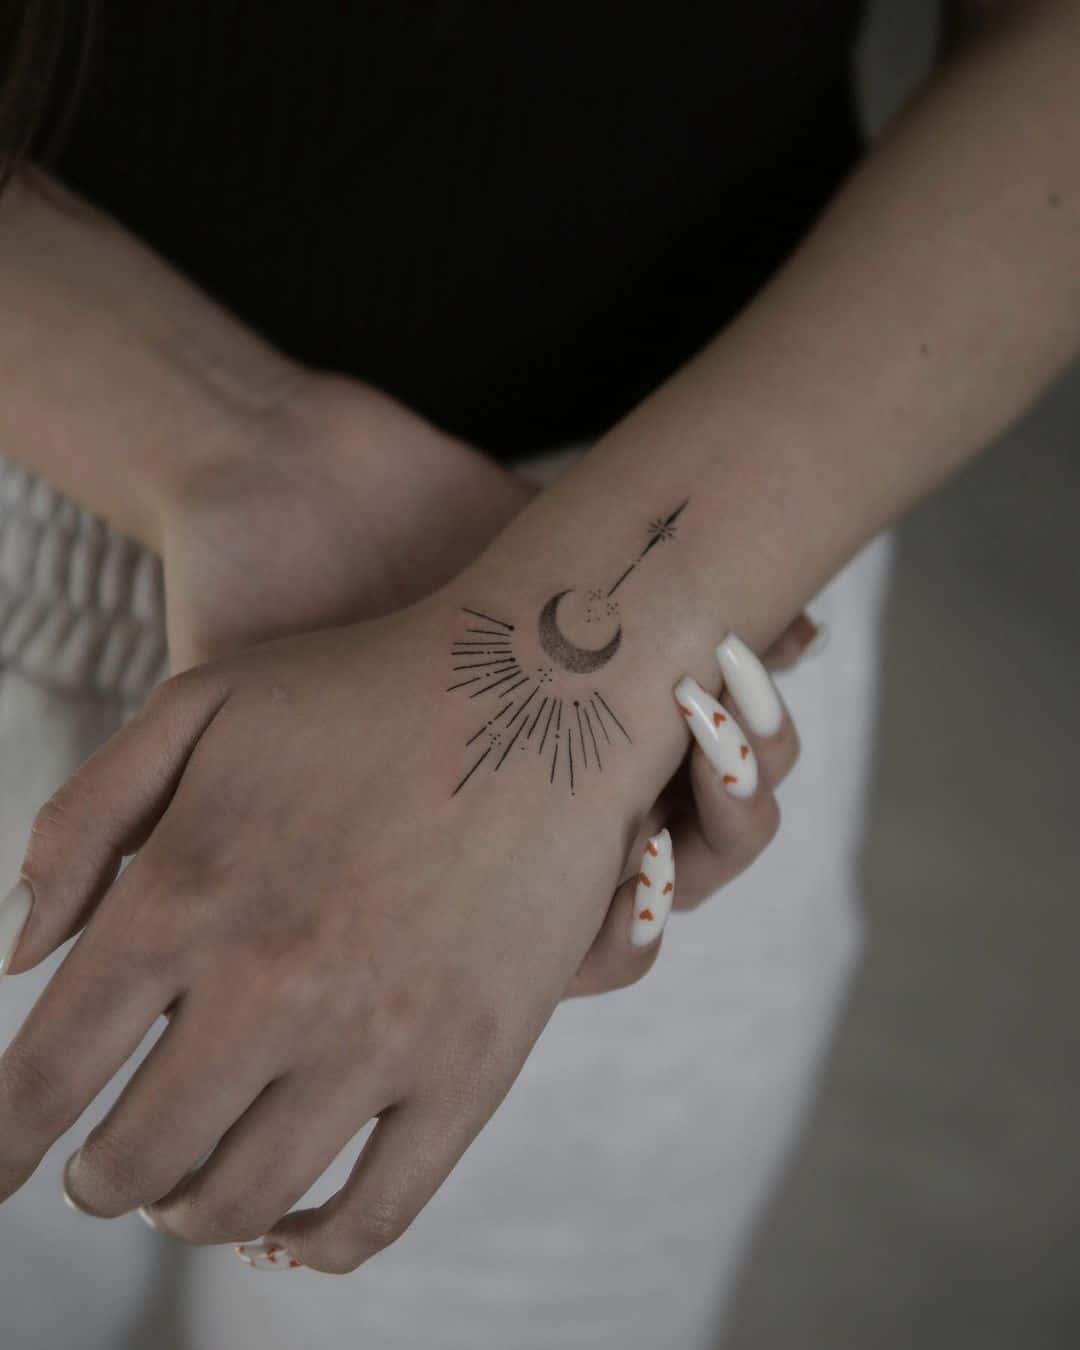 Half sun design tattoo with half moon